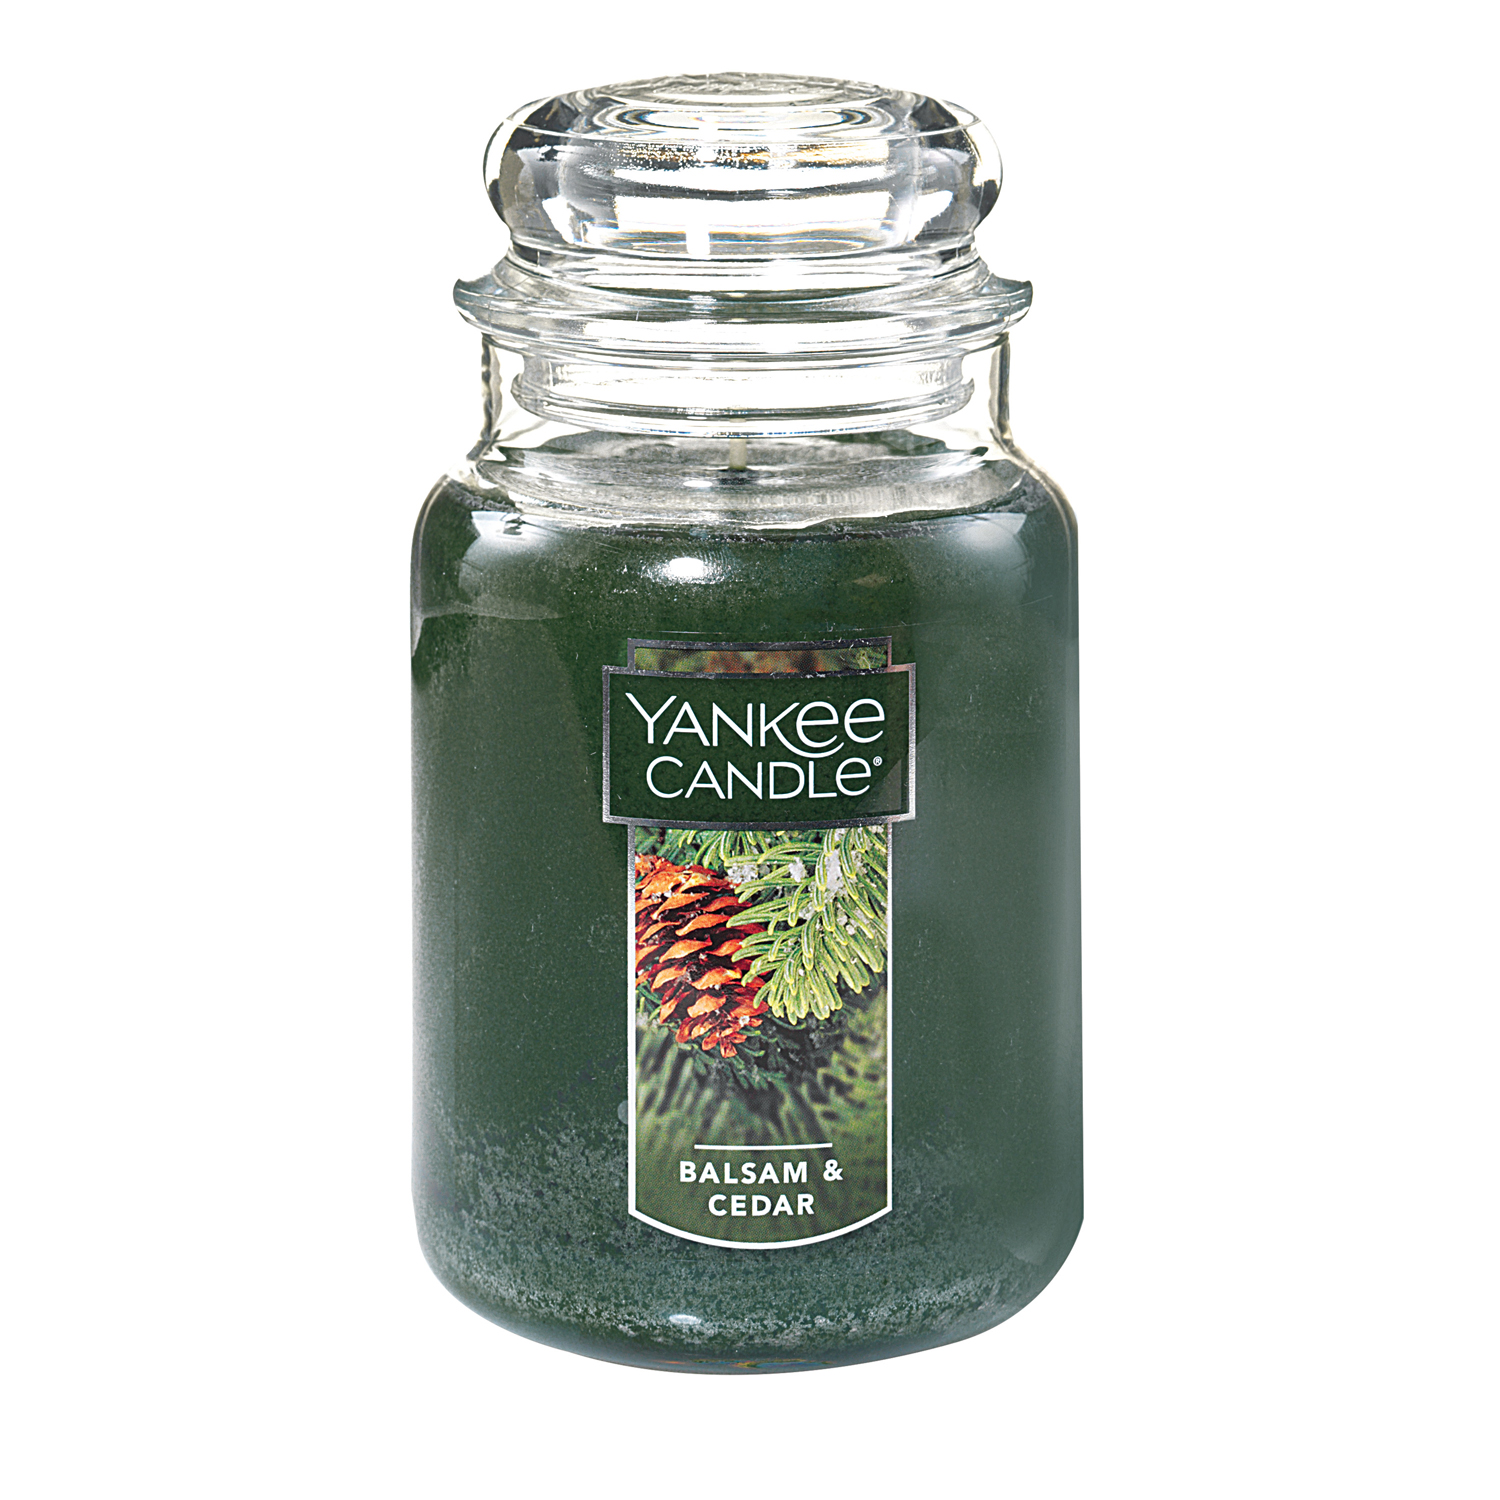 Yankee Candle Balsam & Cedar - 22 oz Original Large Jar Scented Candle - image 1 of 7